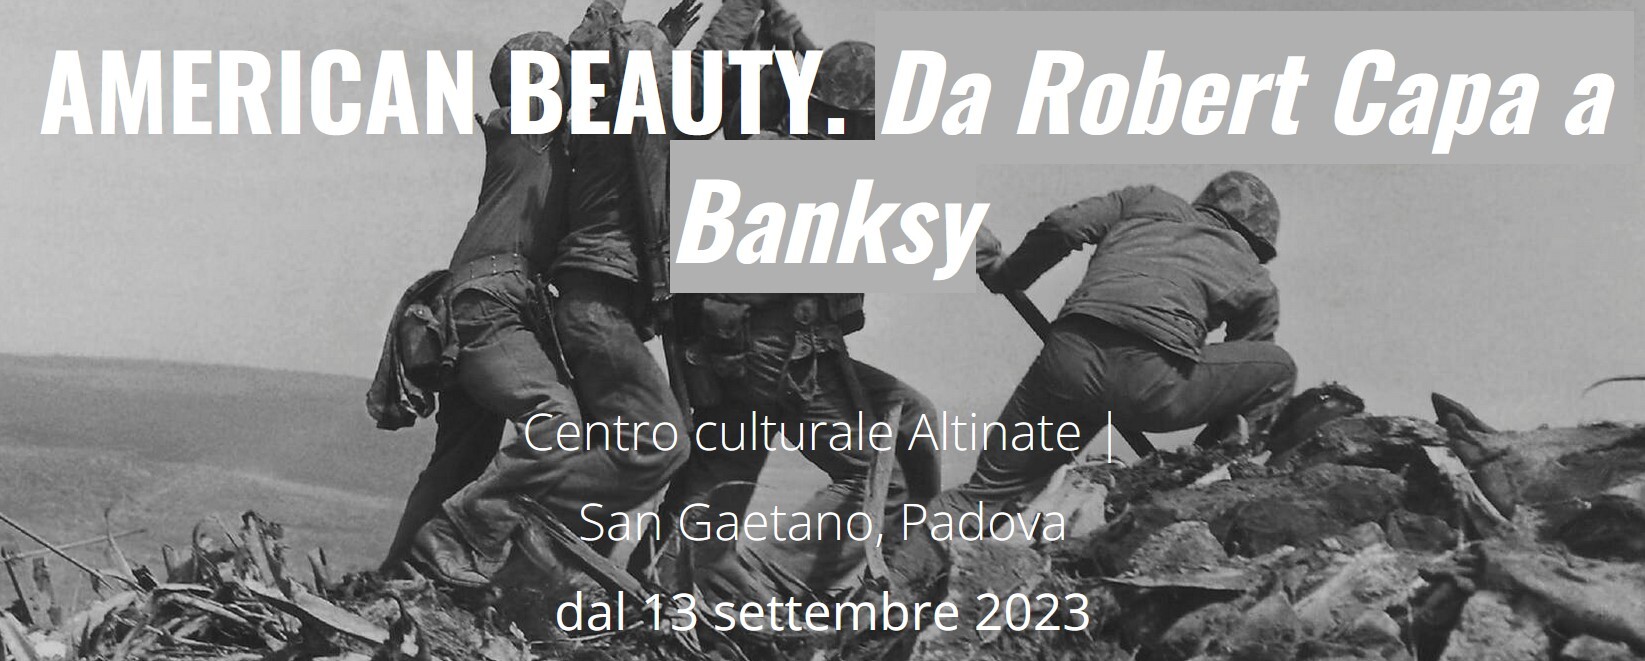 AMERICAN BEAUTY Da Robert Capa a Banksy 130 interpretazioni al San Gaetano di Padova